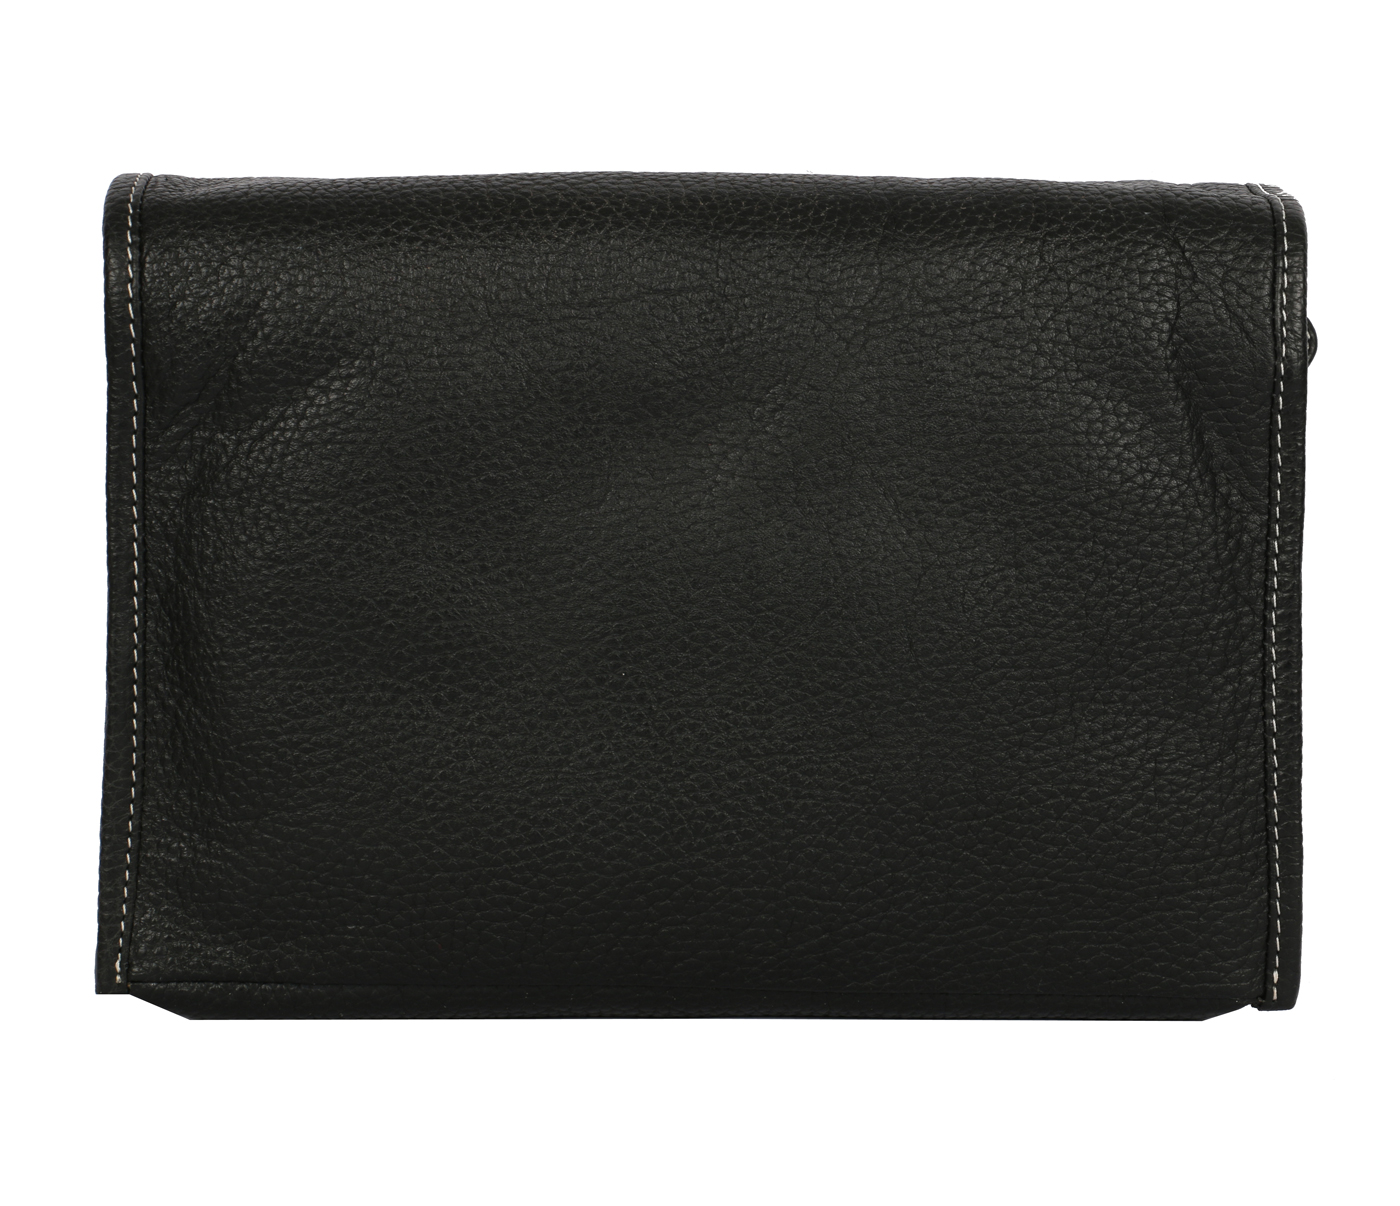 Travel Essential--Unisex Wash & Toiletry travel Bag in Genuine Leather - Black